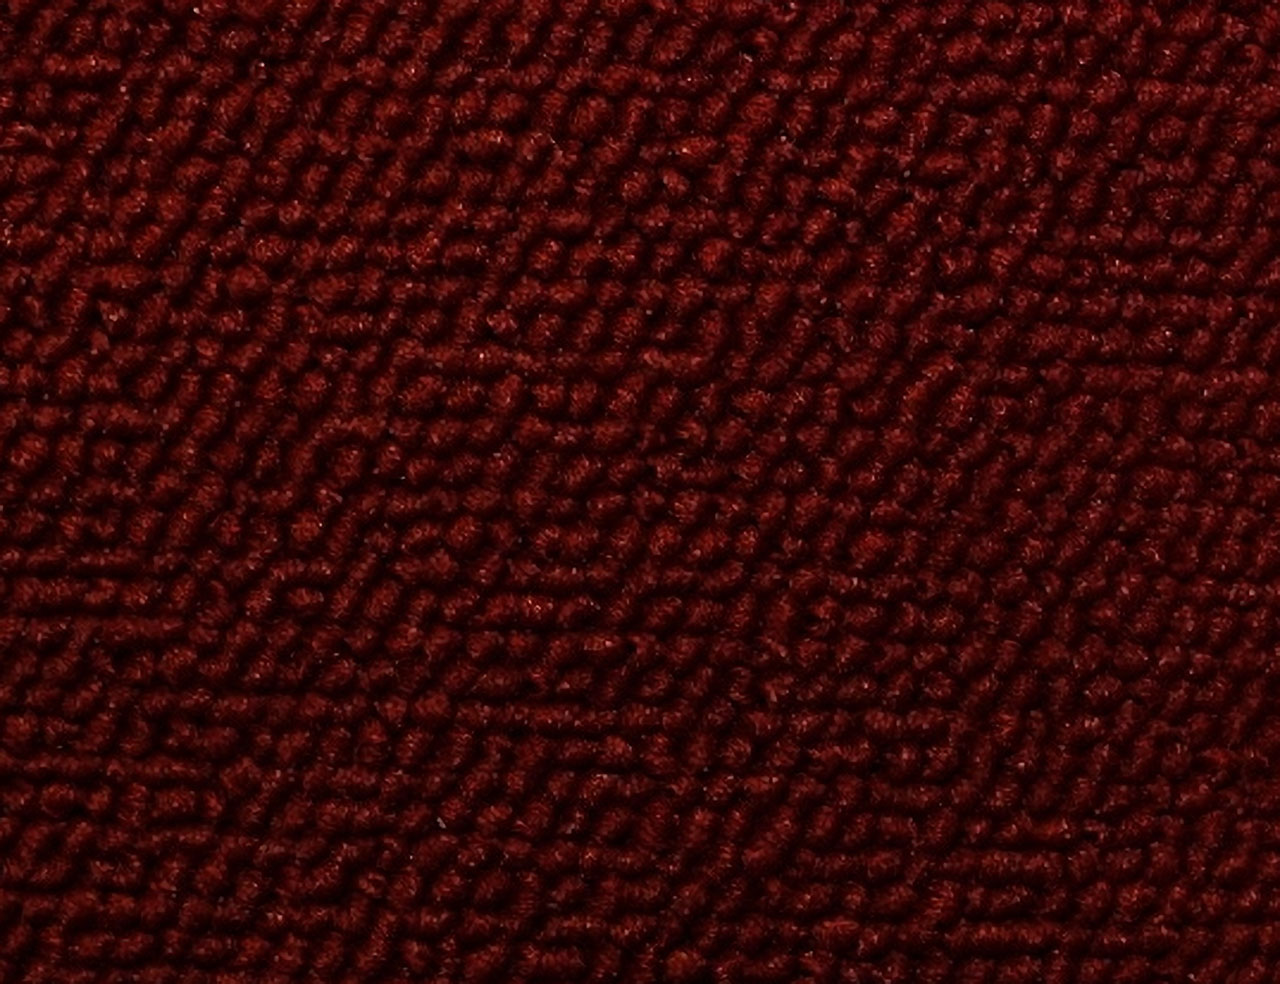 Holden Standard EJ Standard Wagon B02 Bolero Red Carpet (Image 1 of 1)